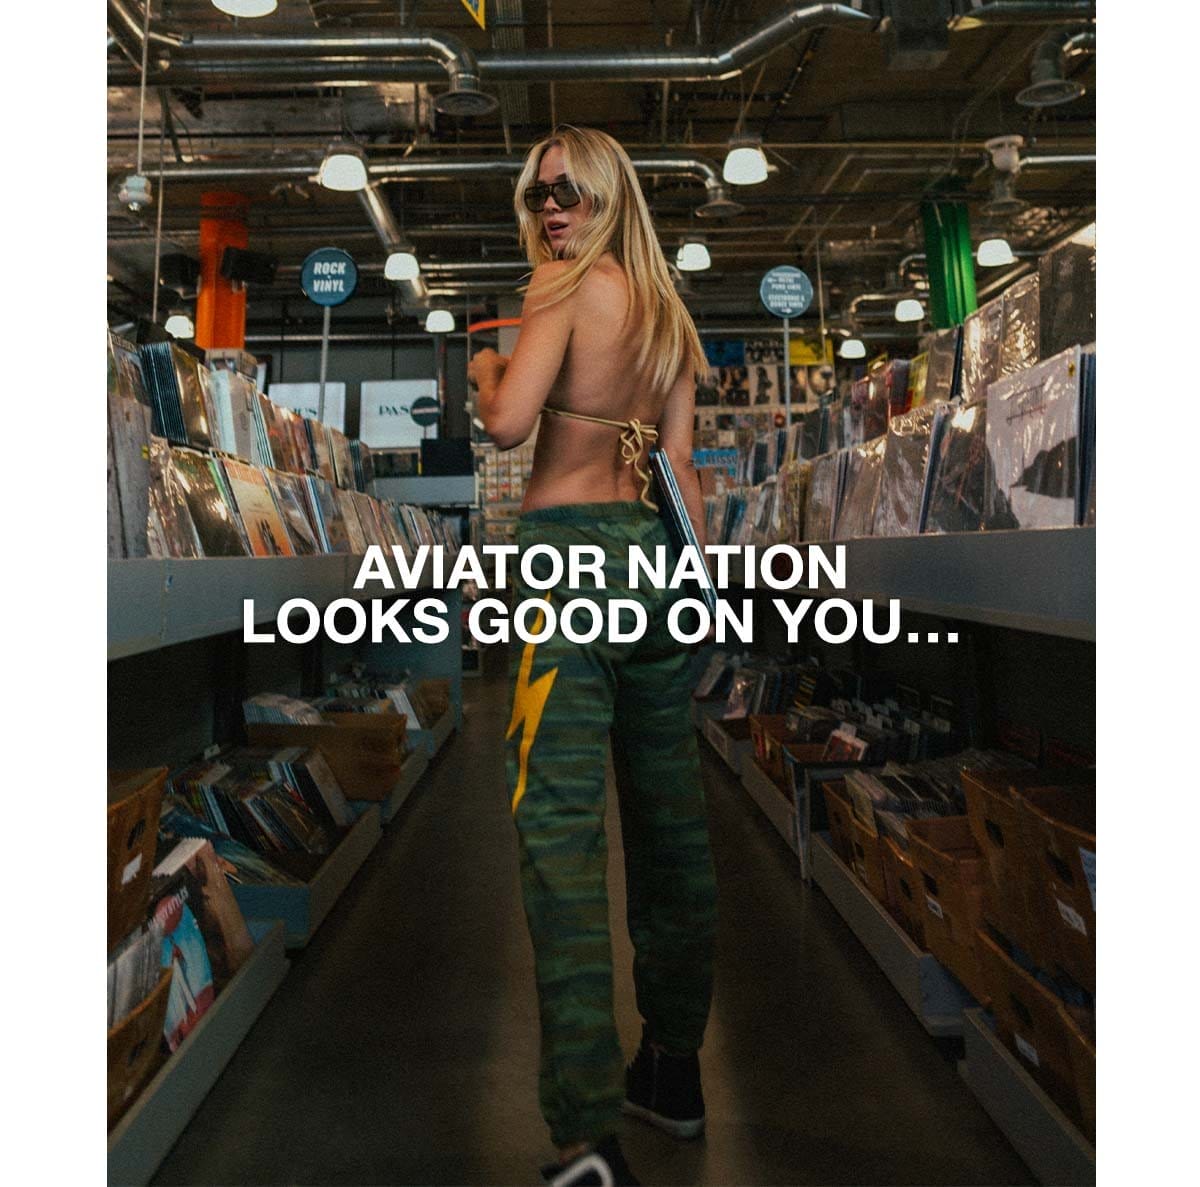 Aviator Nation looks good on you...